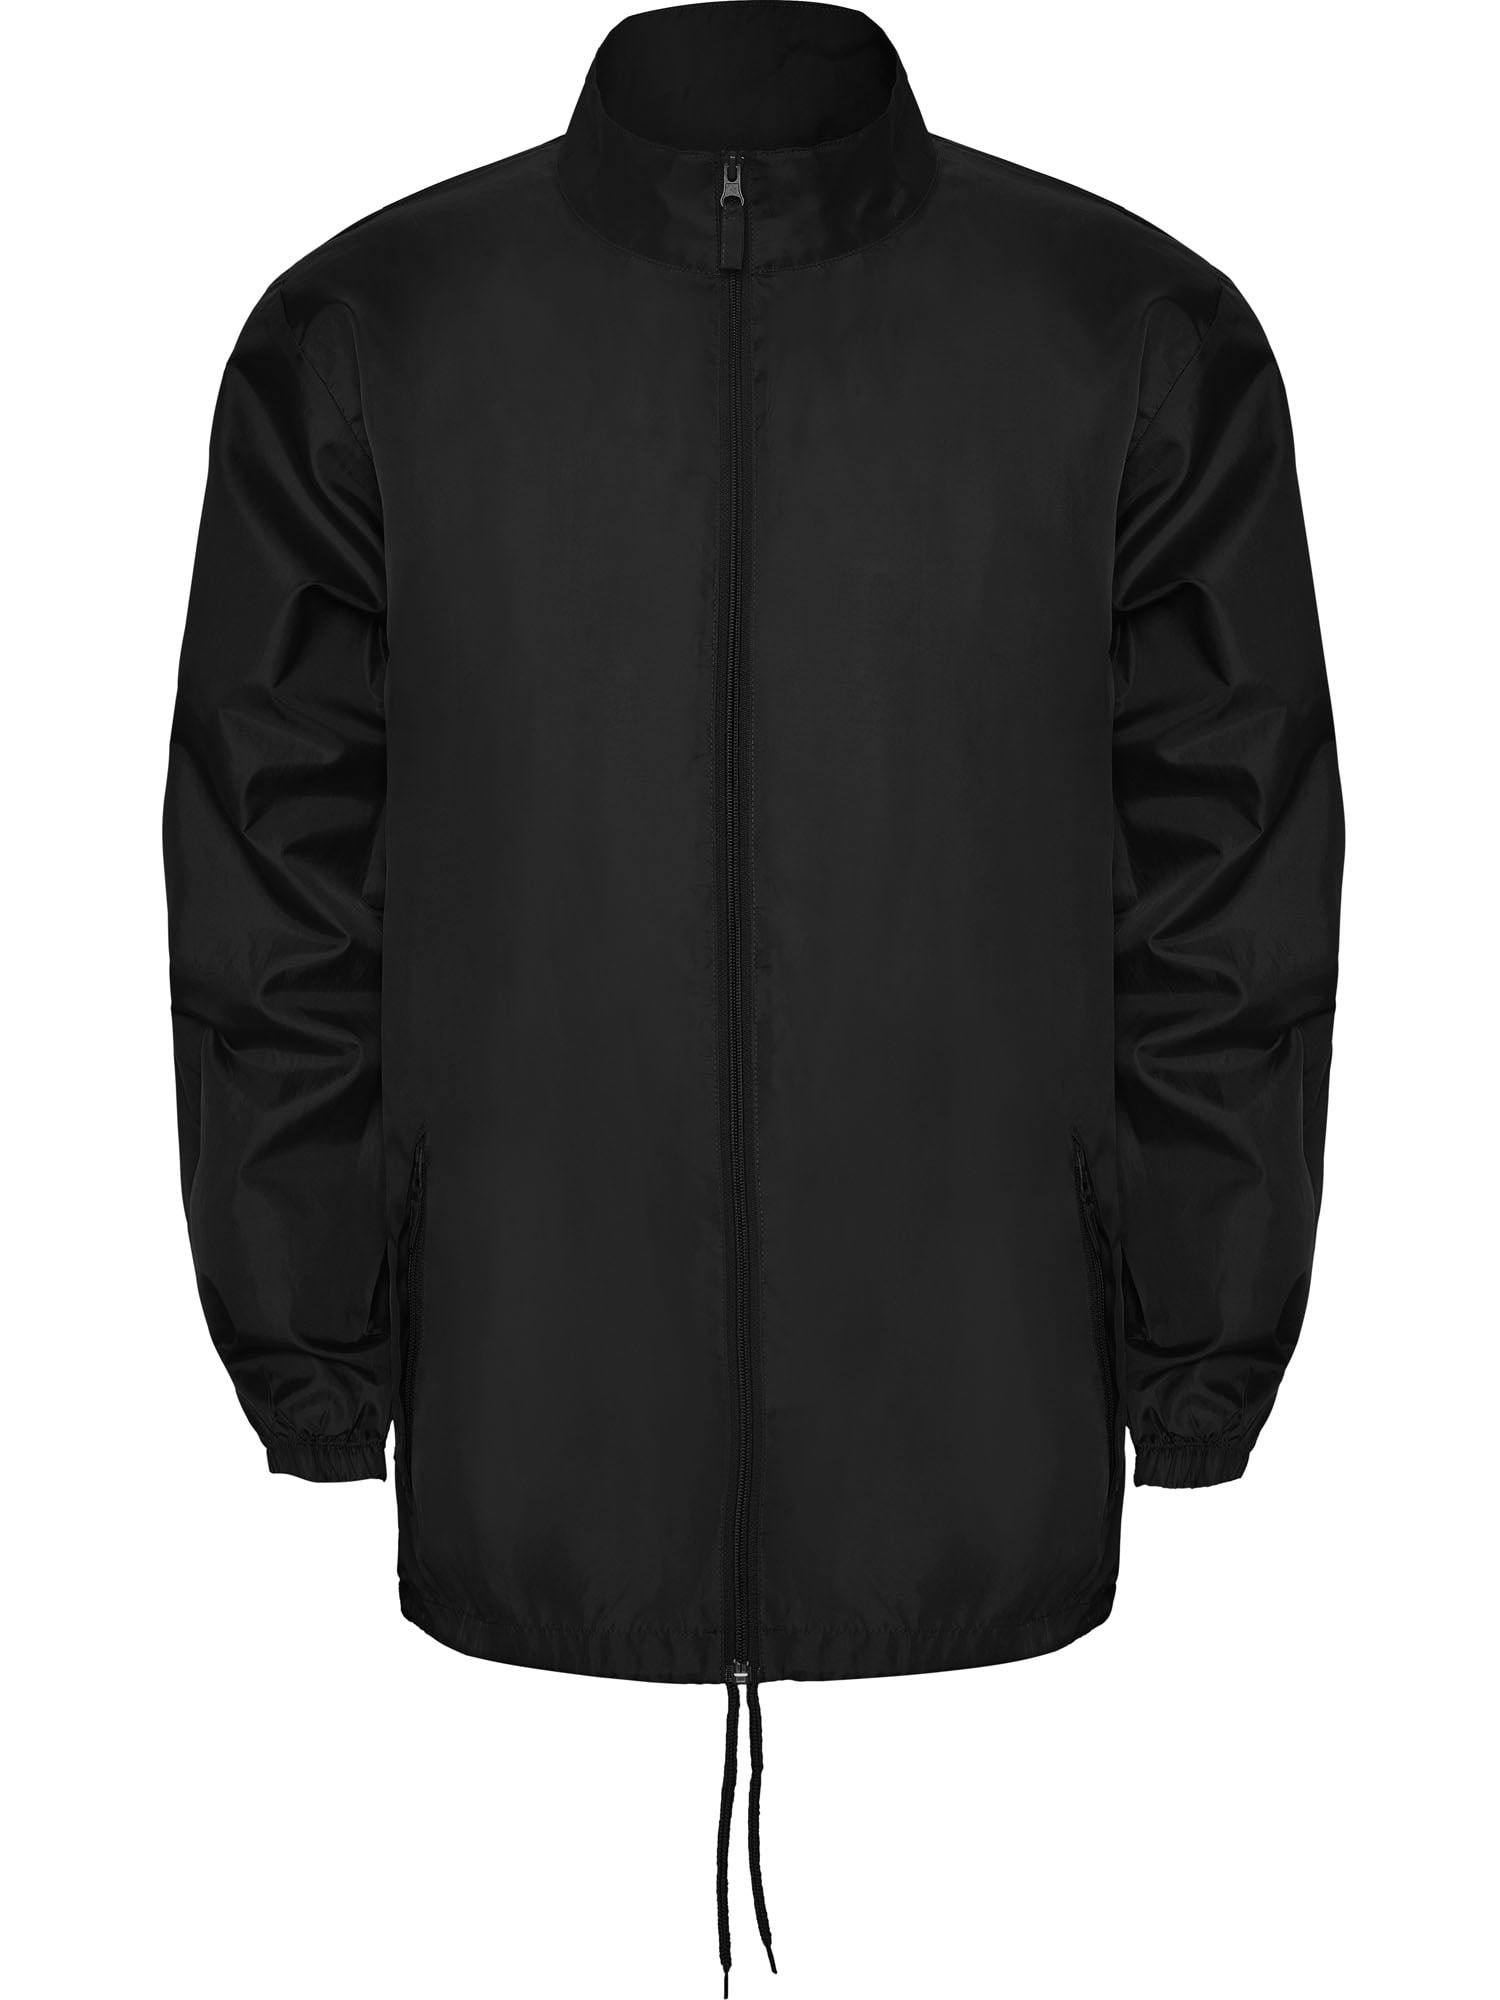 black thin jacket with hood